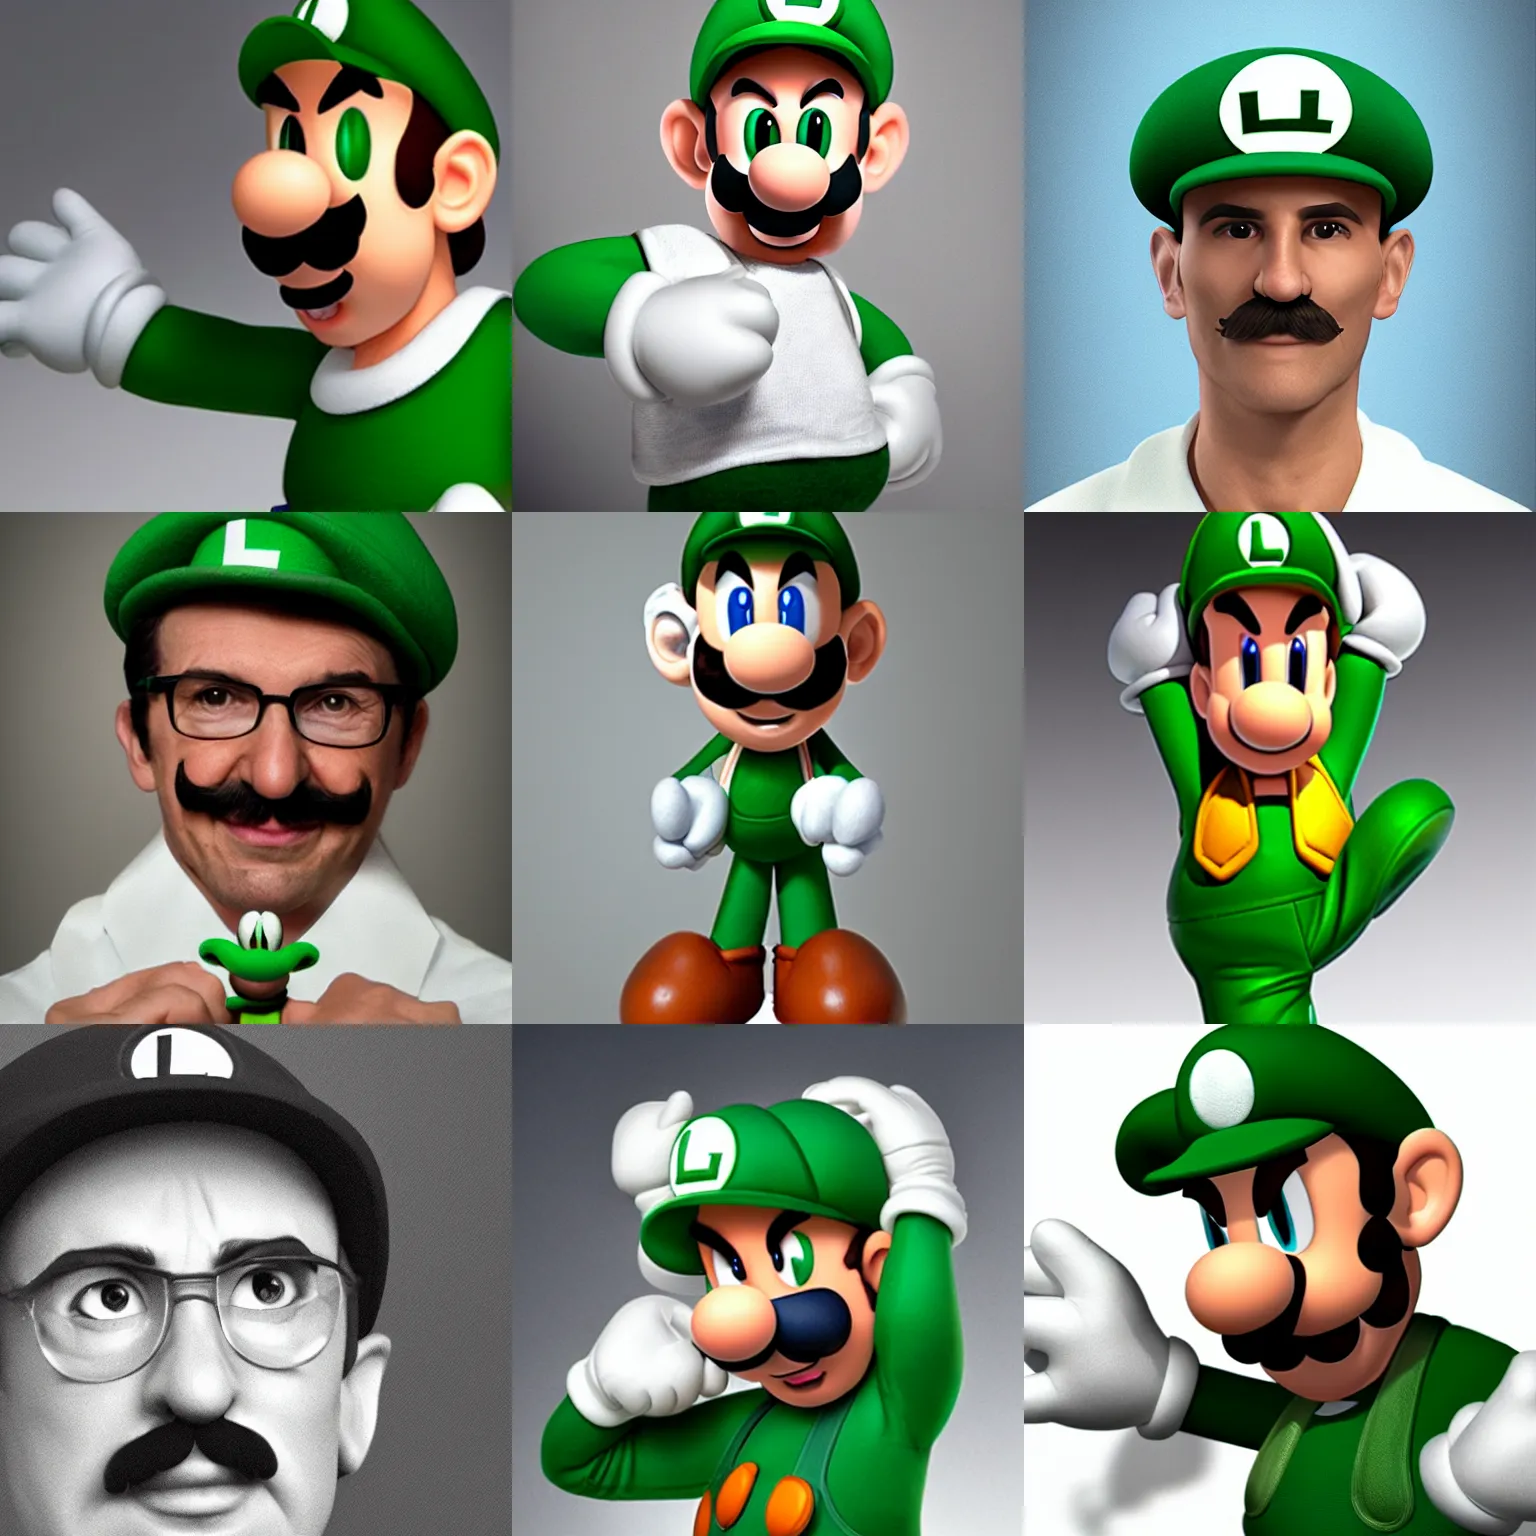 Prompt: Luigi as a real person, studio photo, realistic